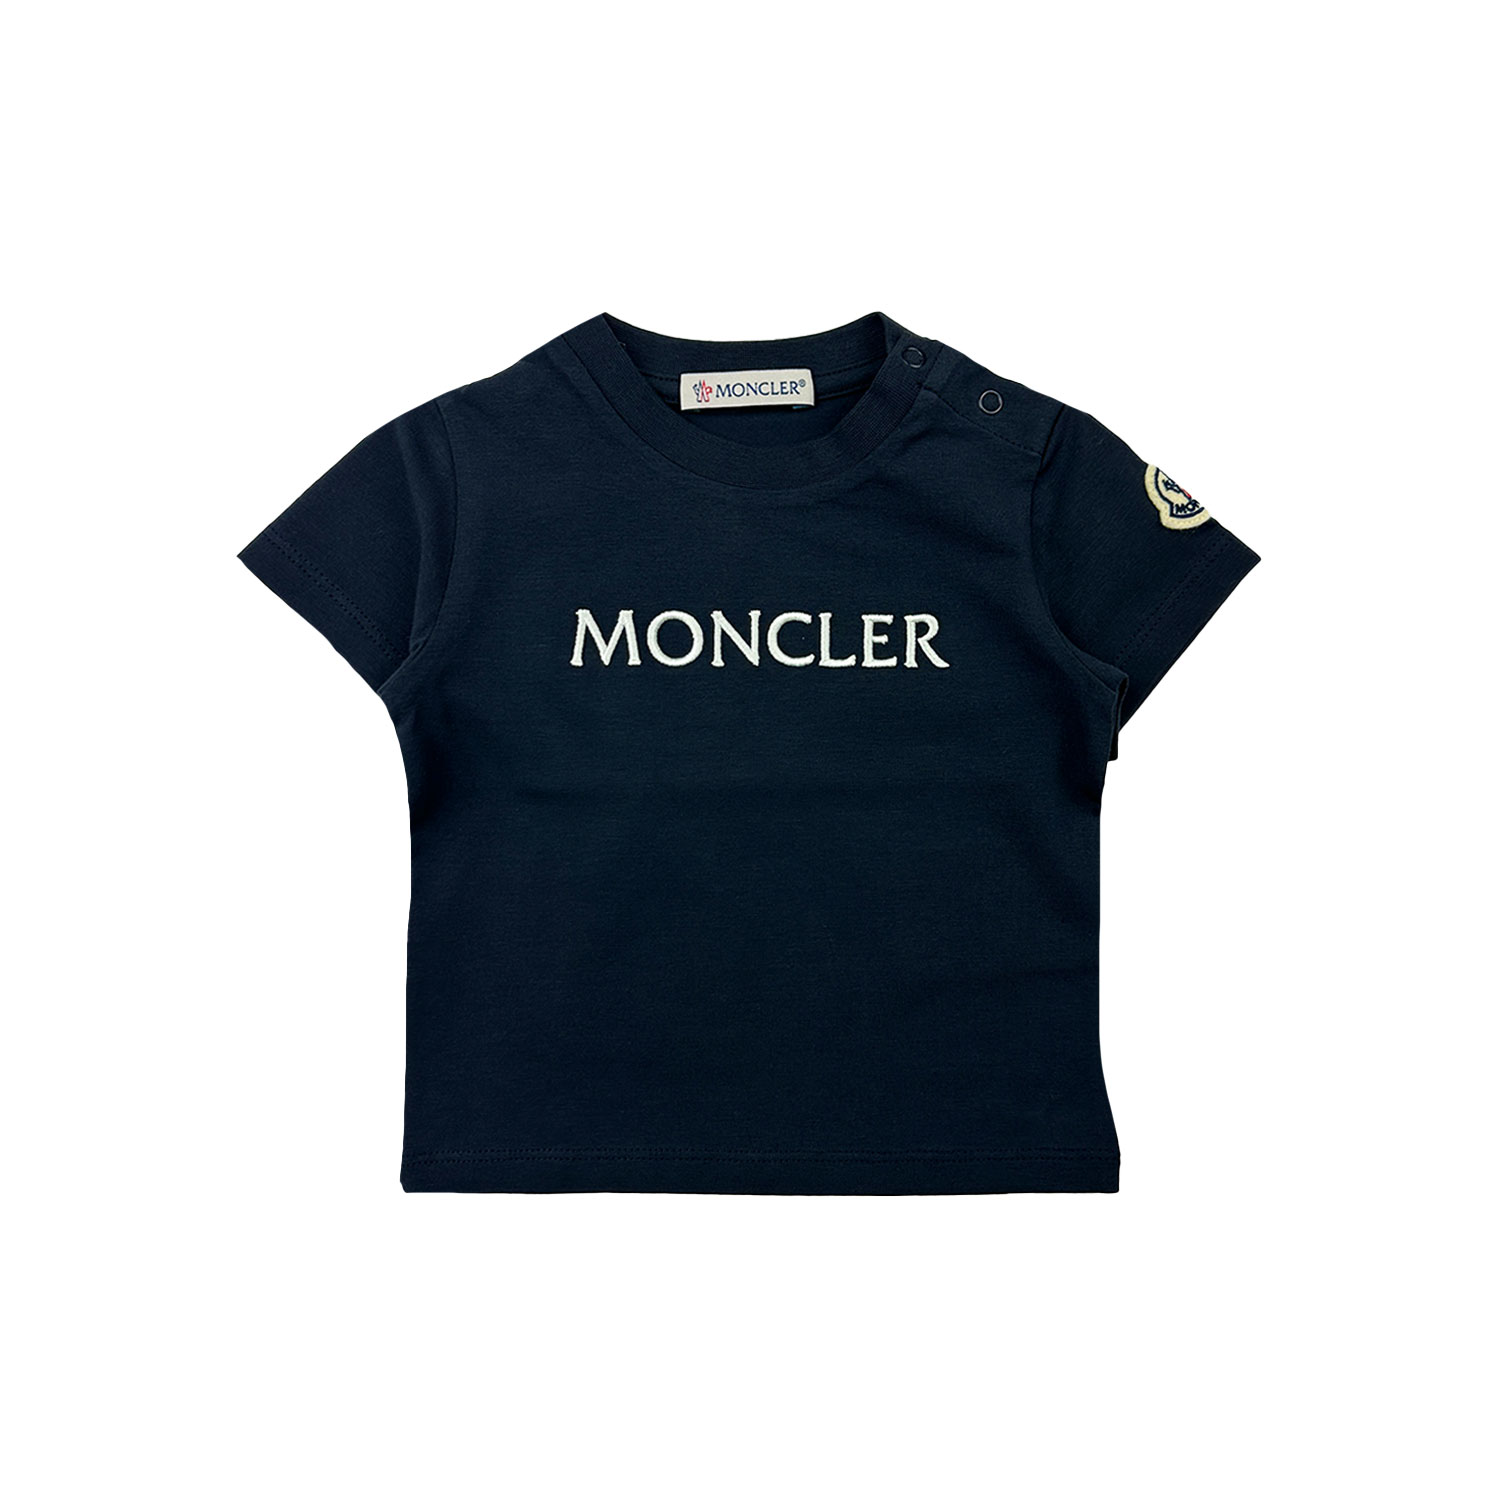 moncler-shirt-dblauw-klein